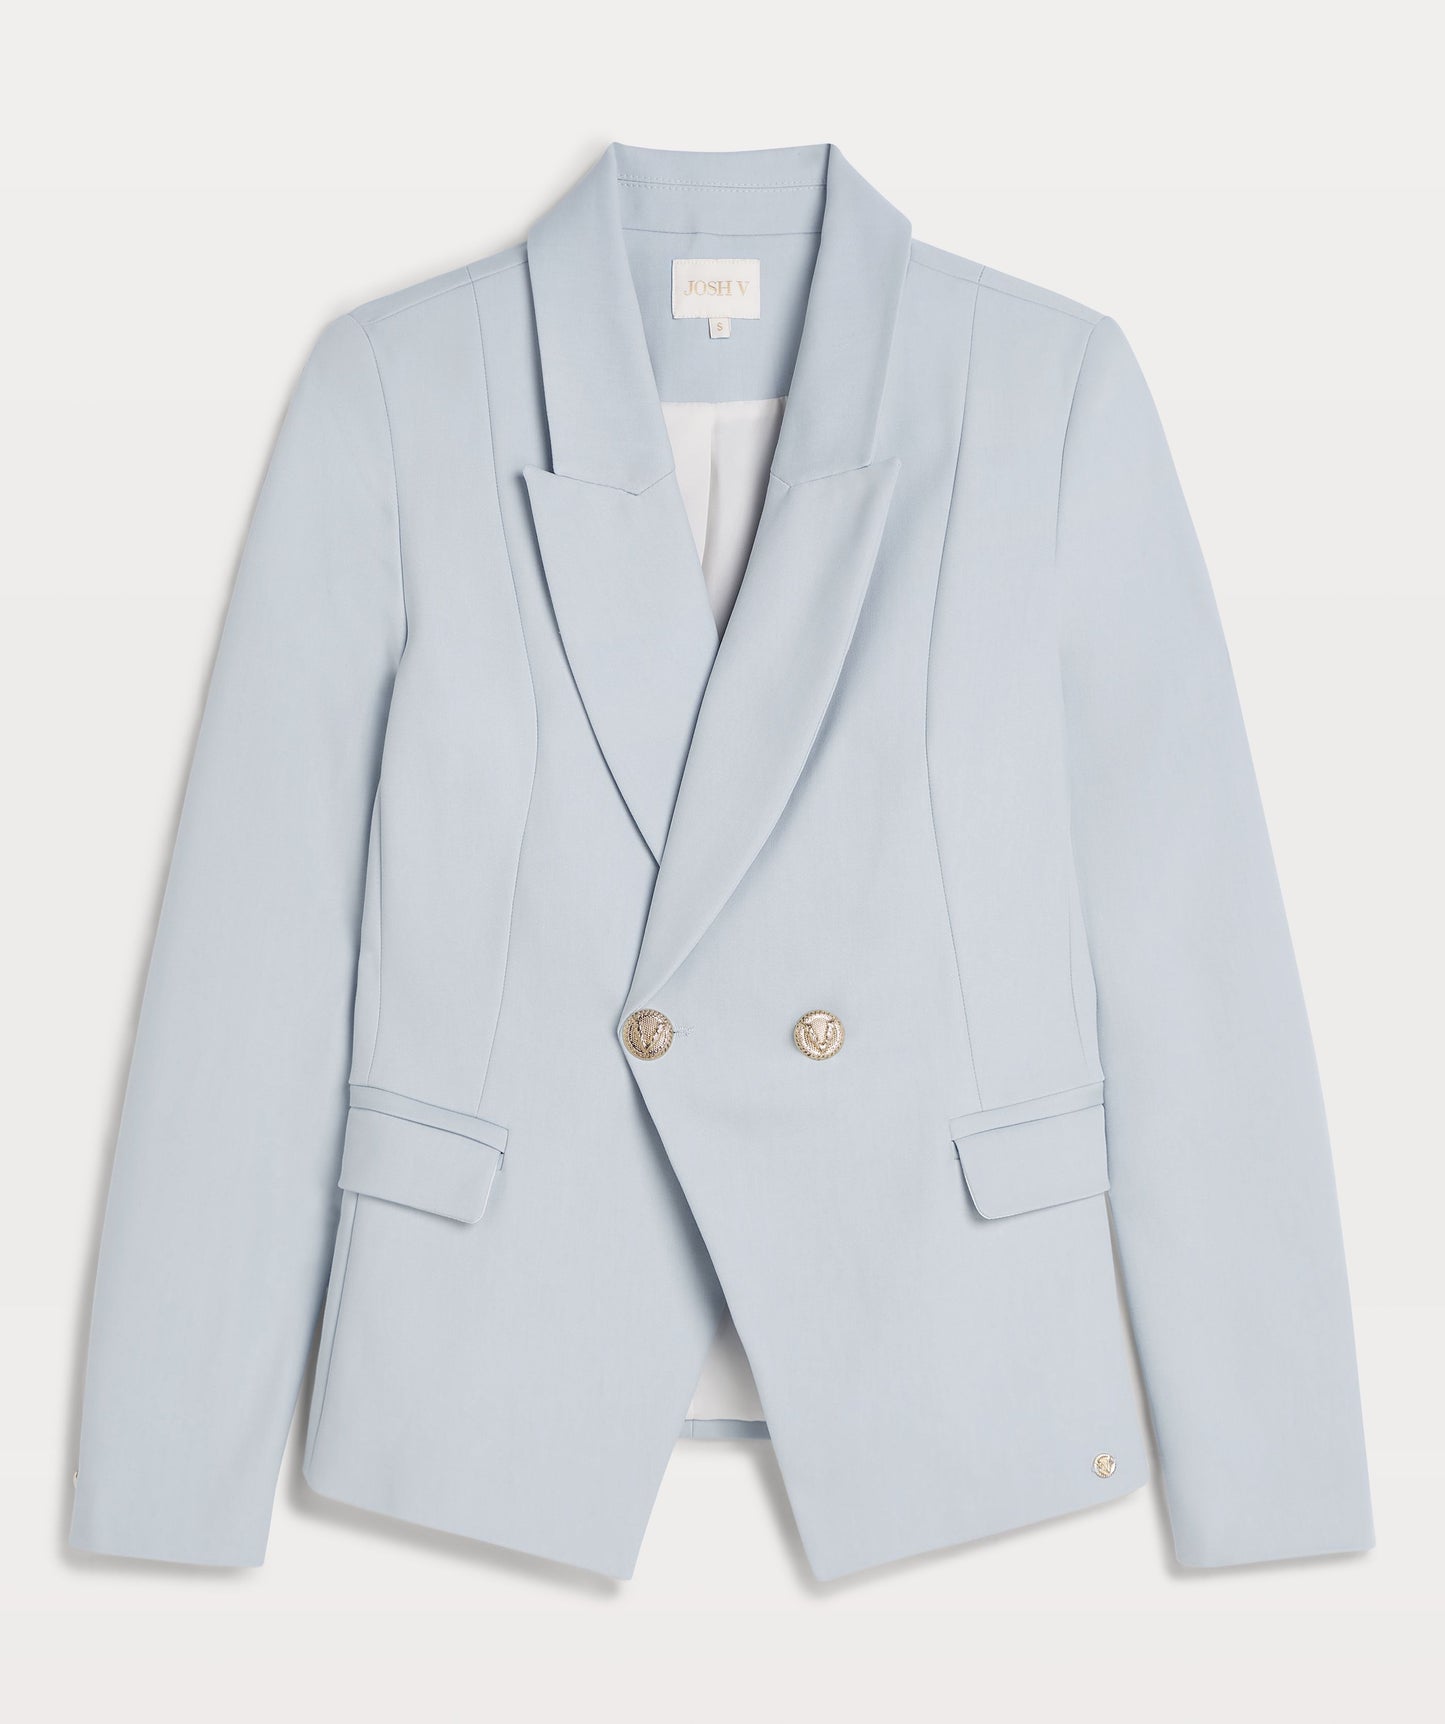 ZOYA fitted blazer - fresh blue